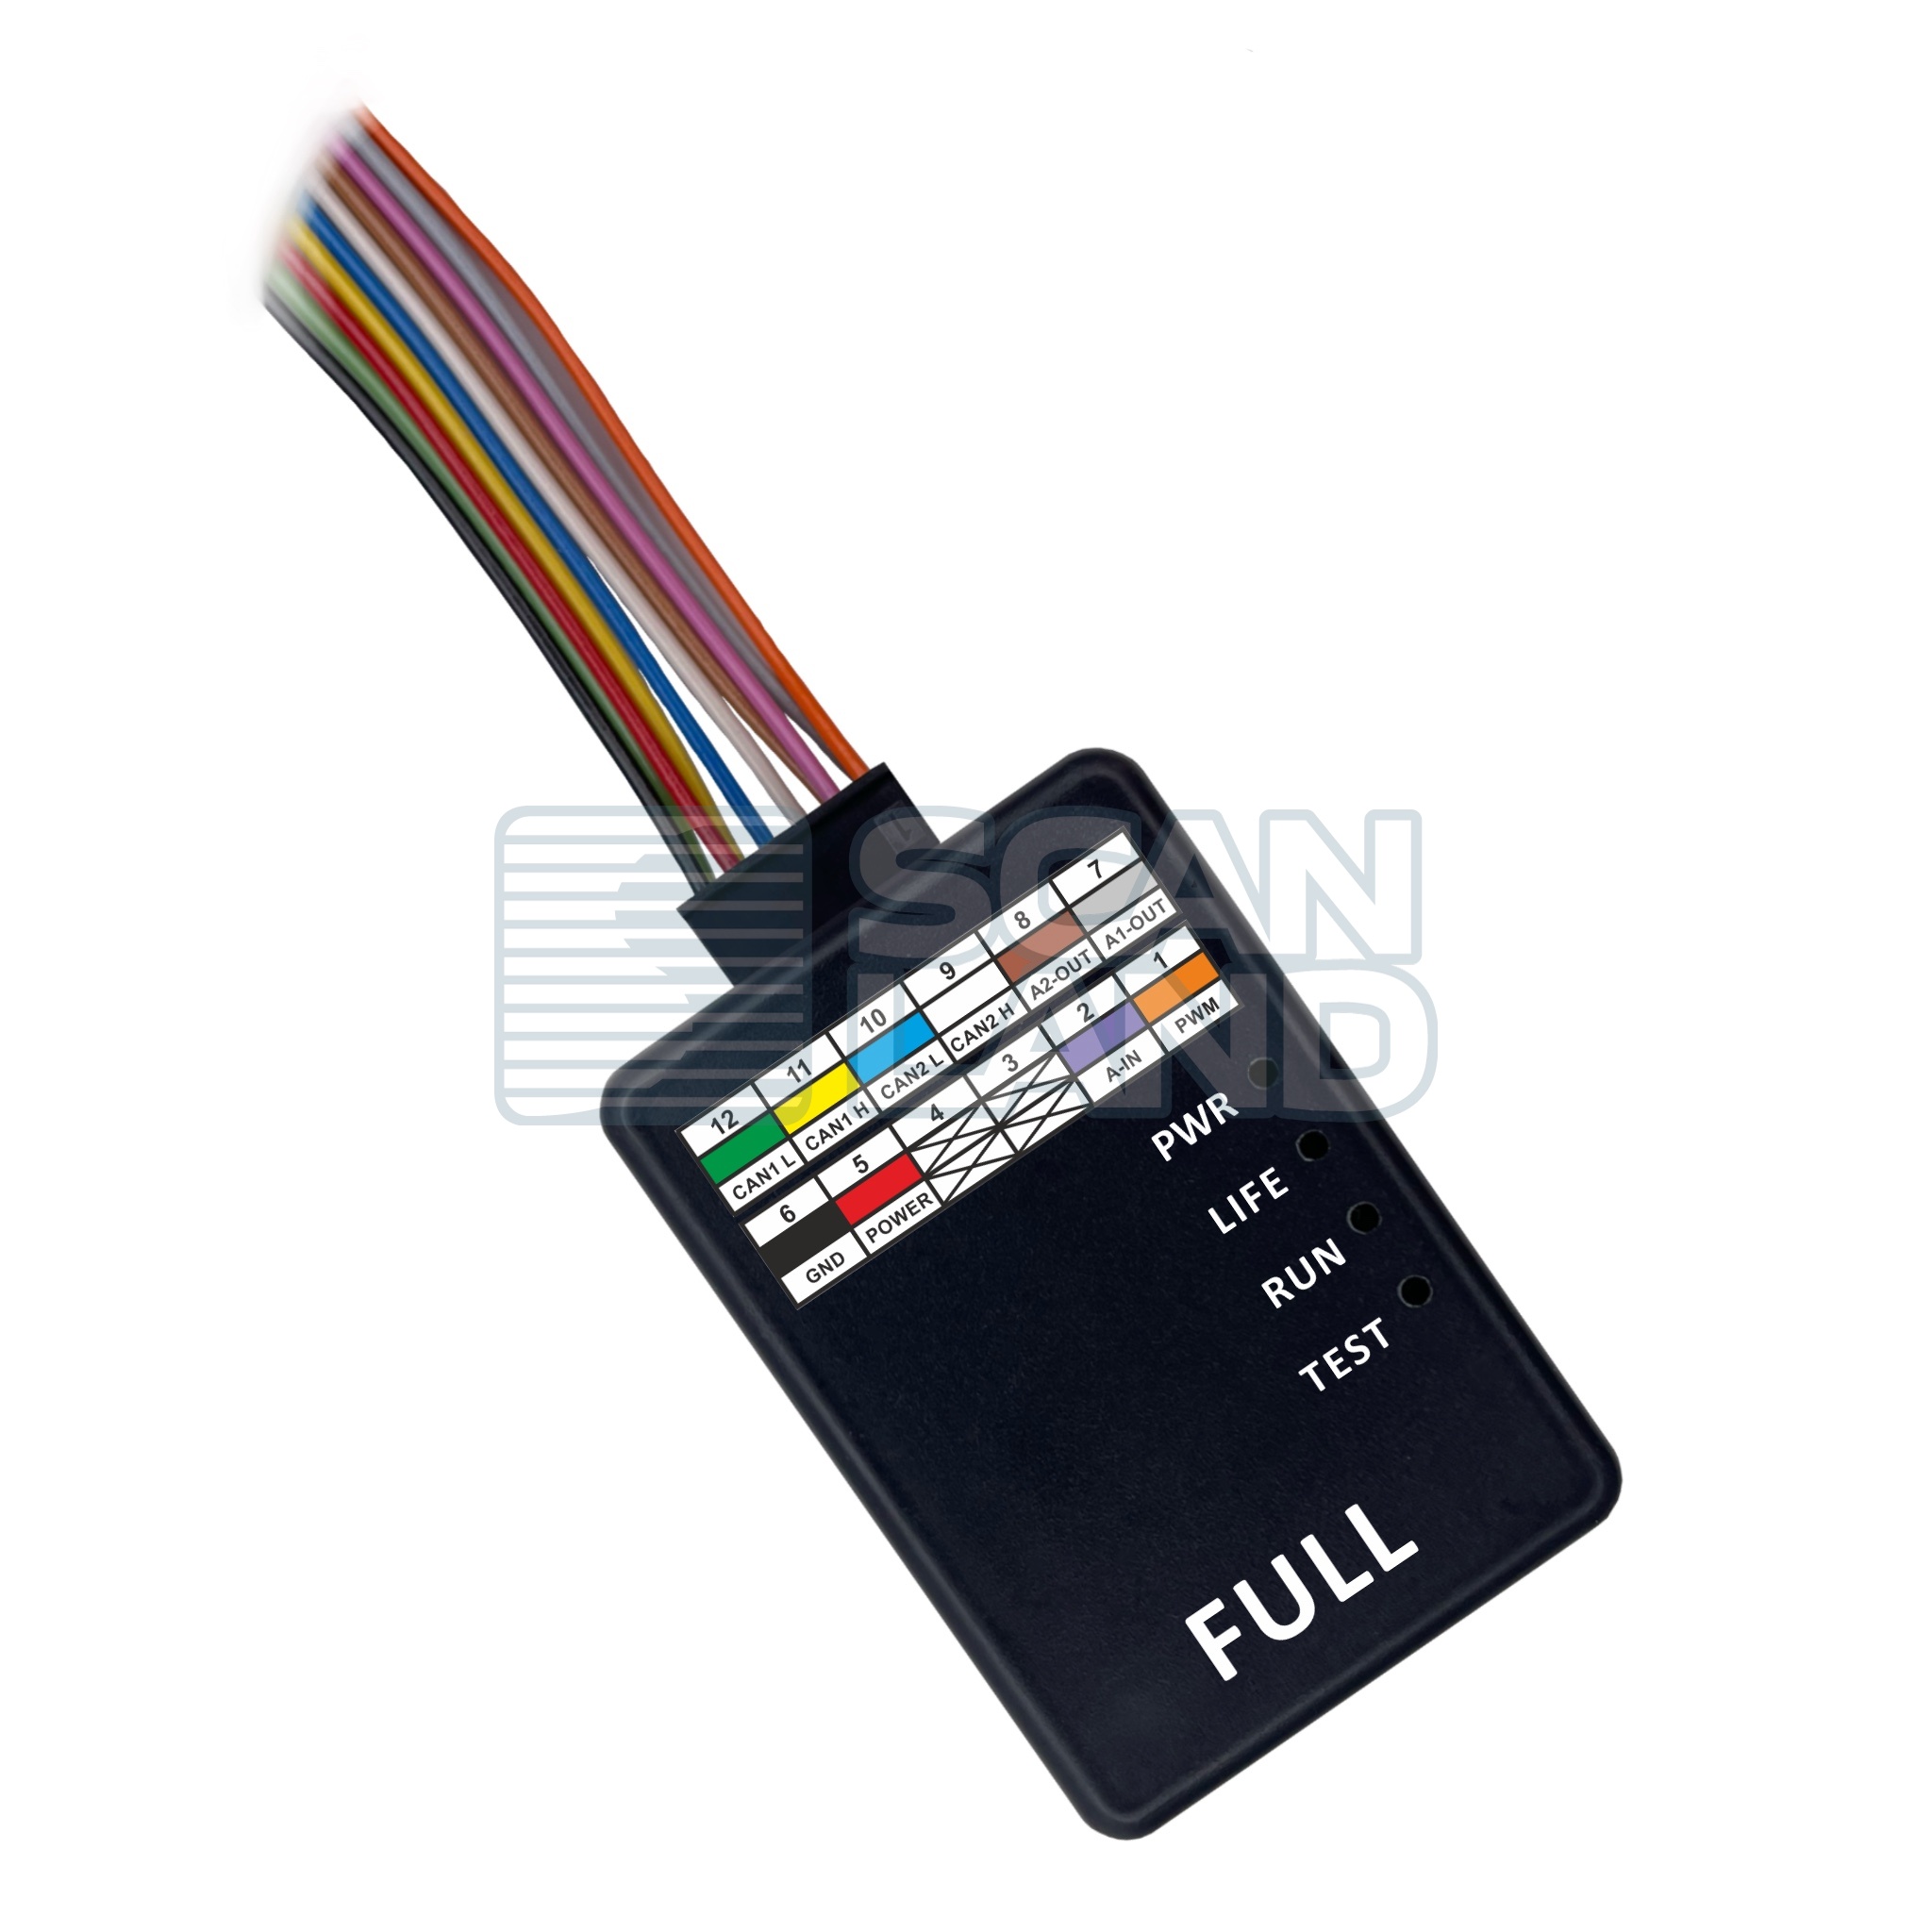  AdBlue Emu-Max Full v.11.09     653 (Renault DCI11), 